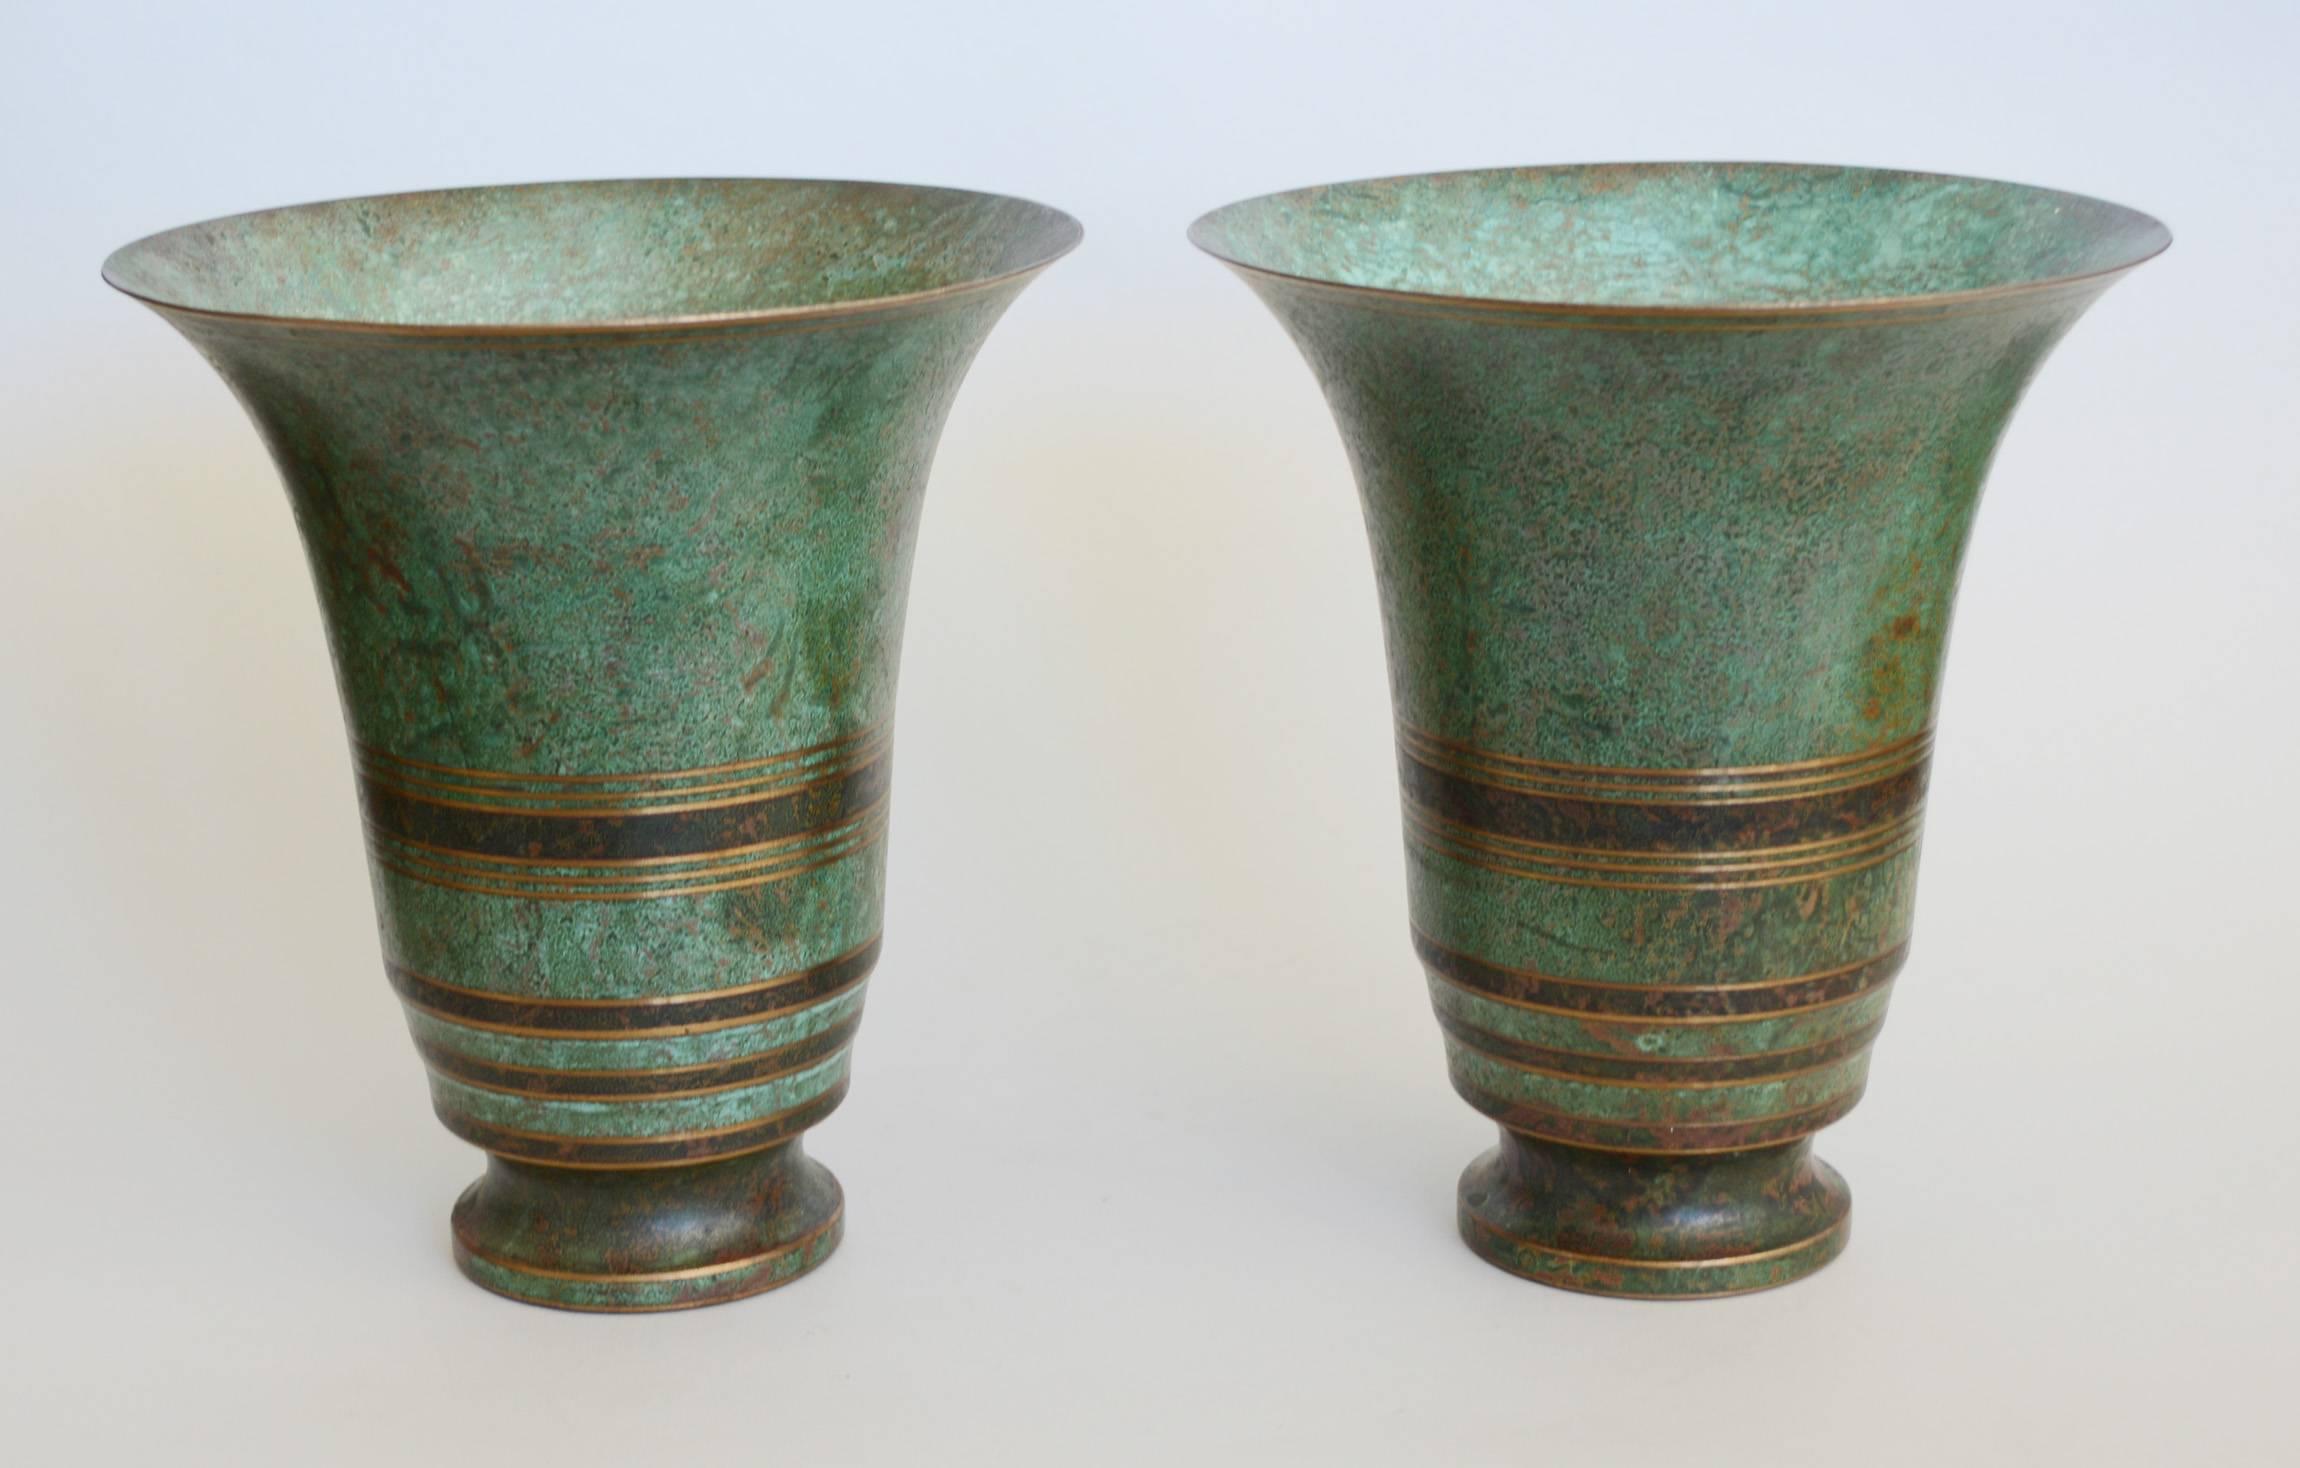 Pair of flaring verdigris bronze vases by Carl Sorensen.